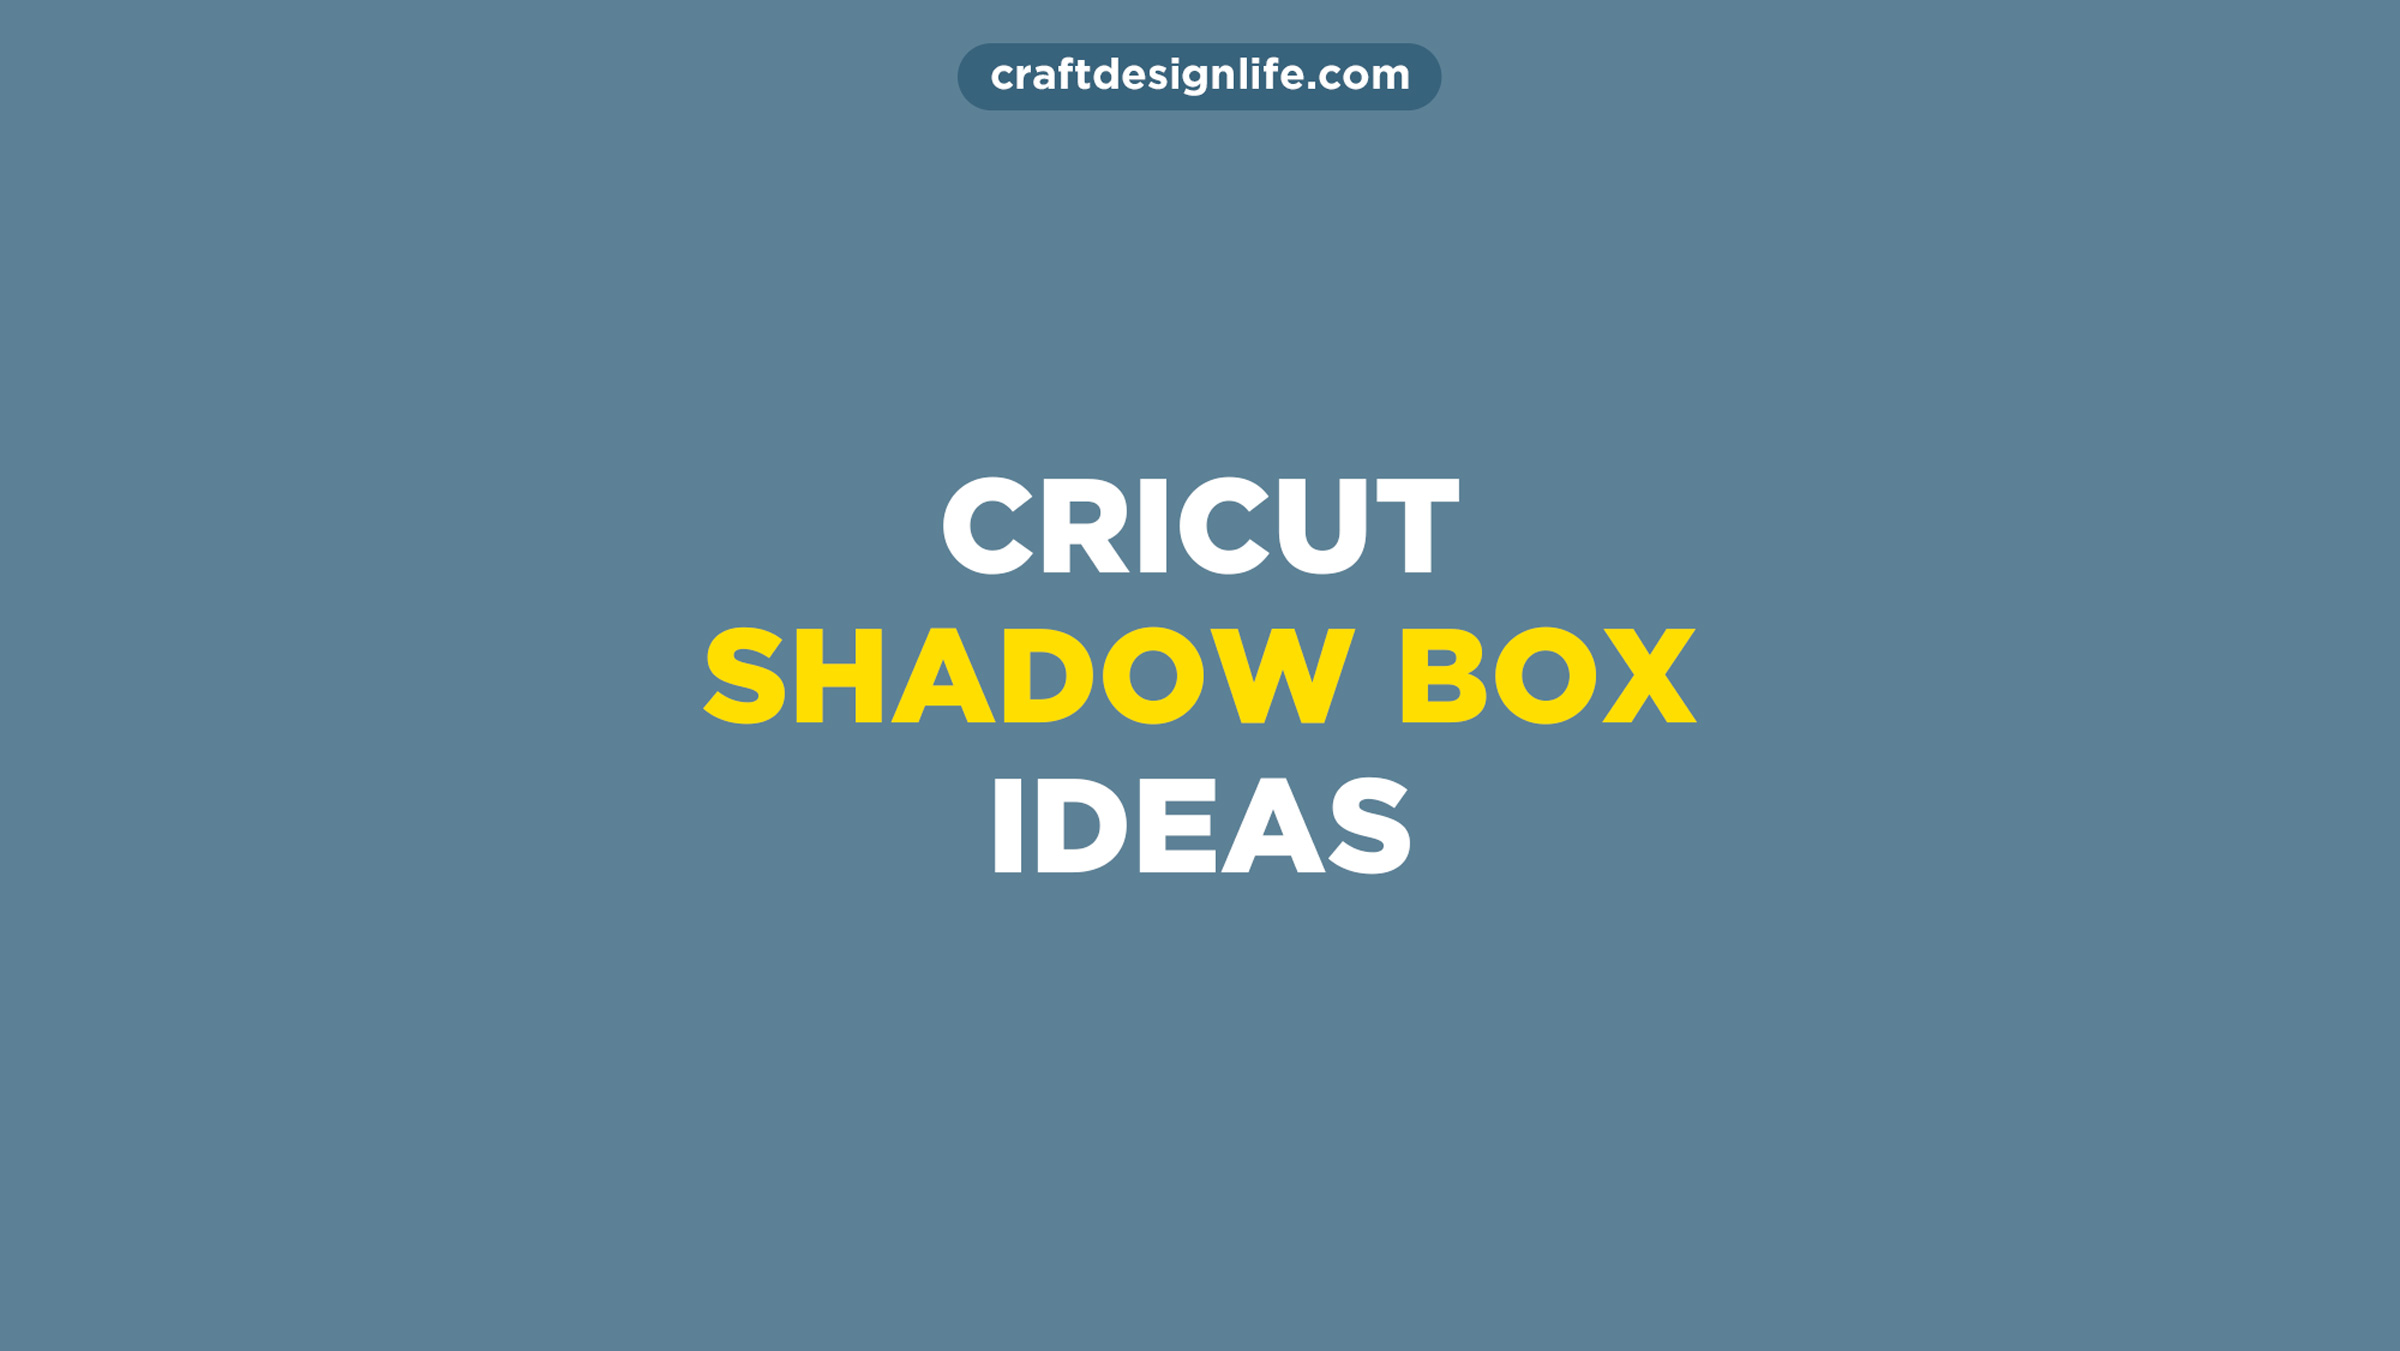 Cricut Shadow Box Ideas & Projects